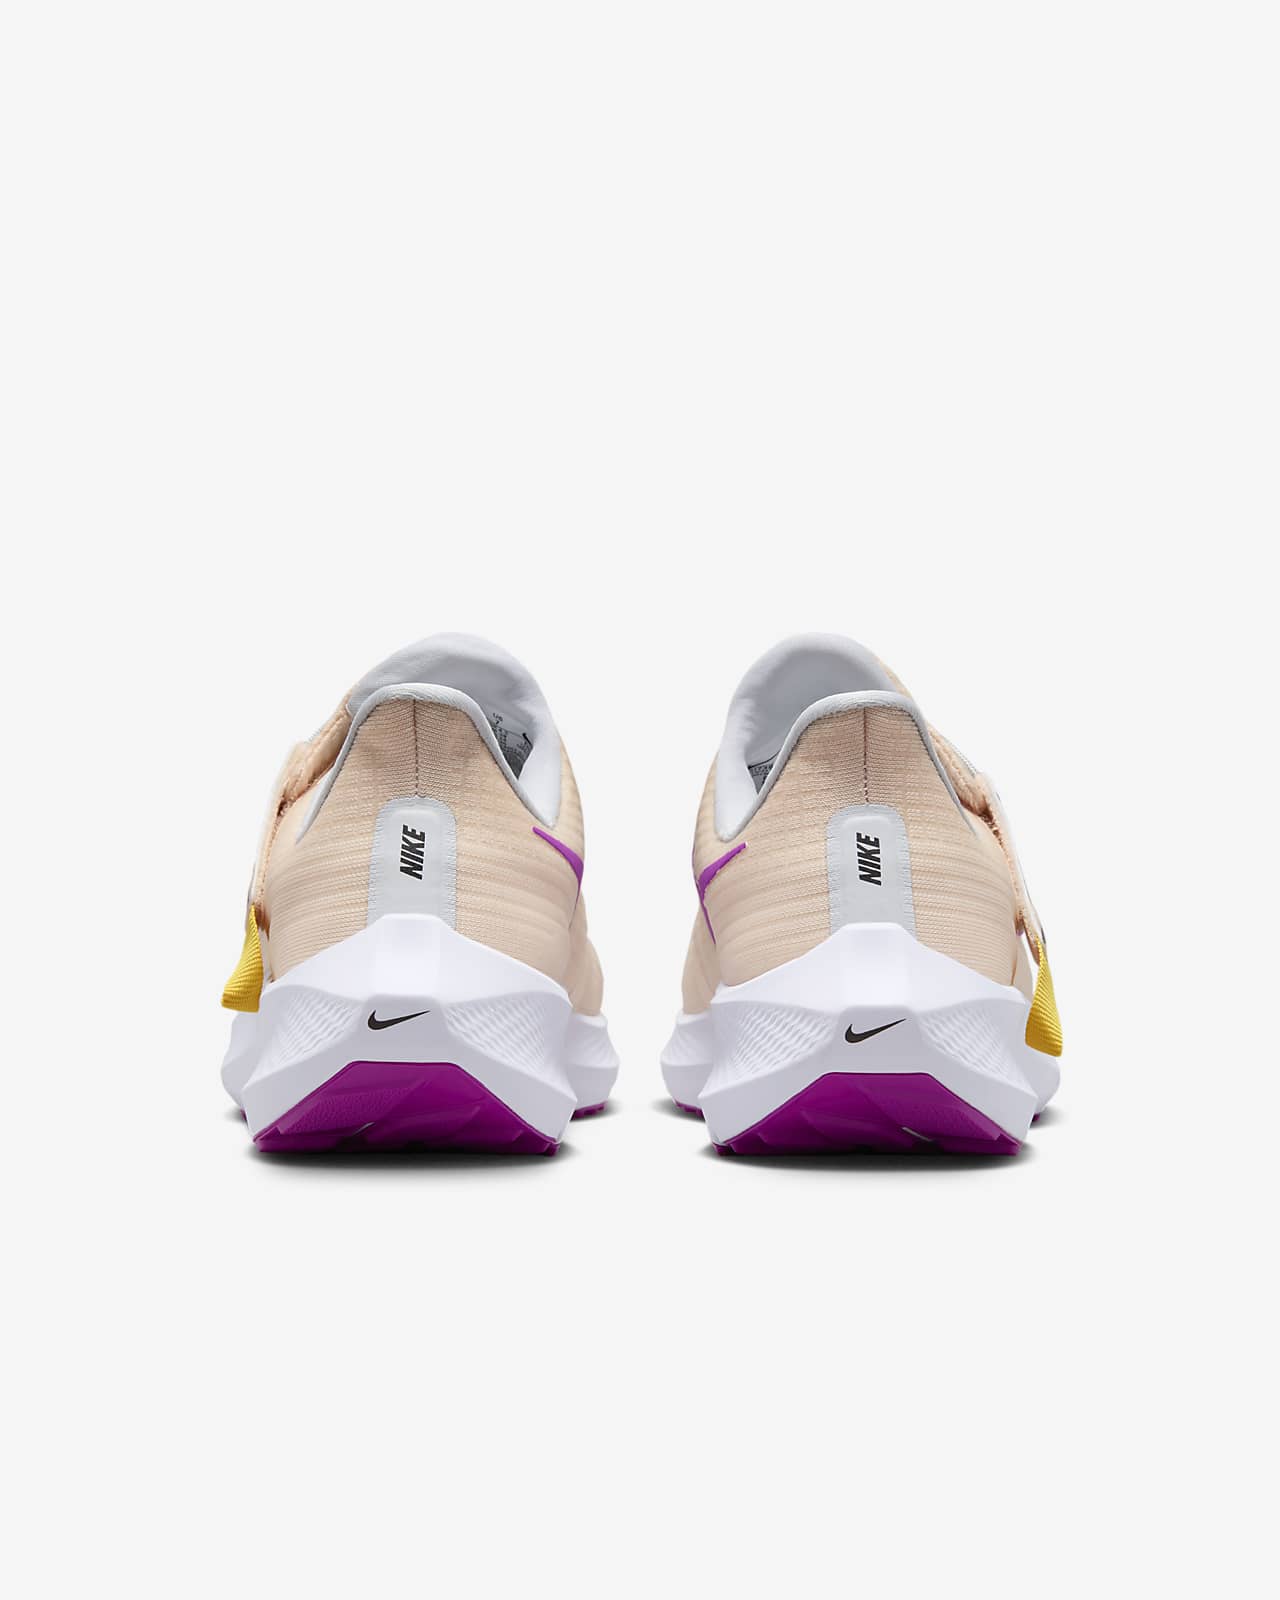 Nike Pegasus FlyEase Womens Running Shoes Review